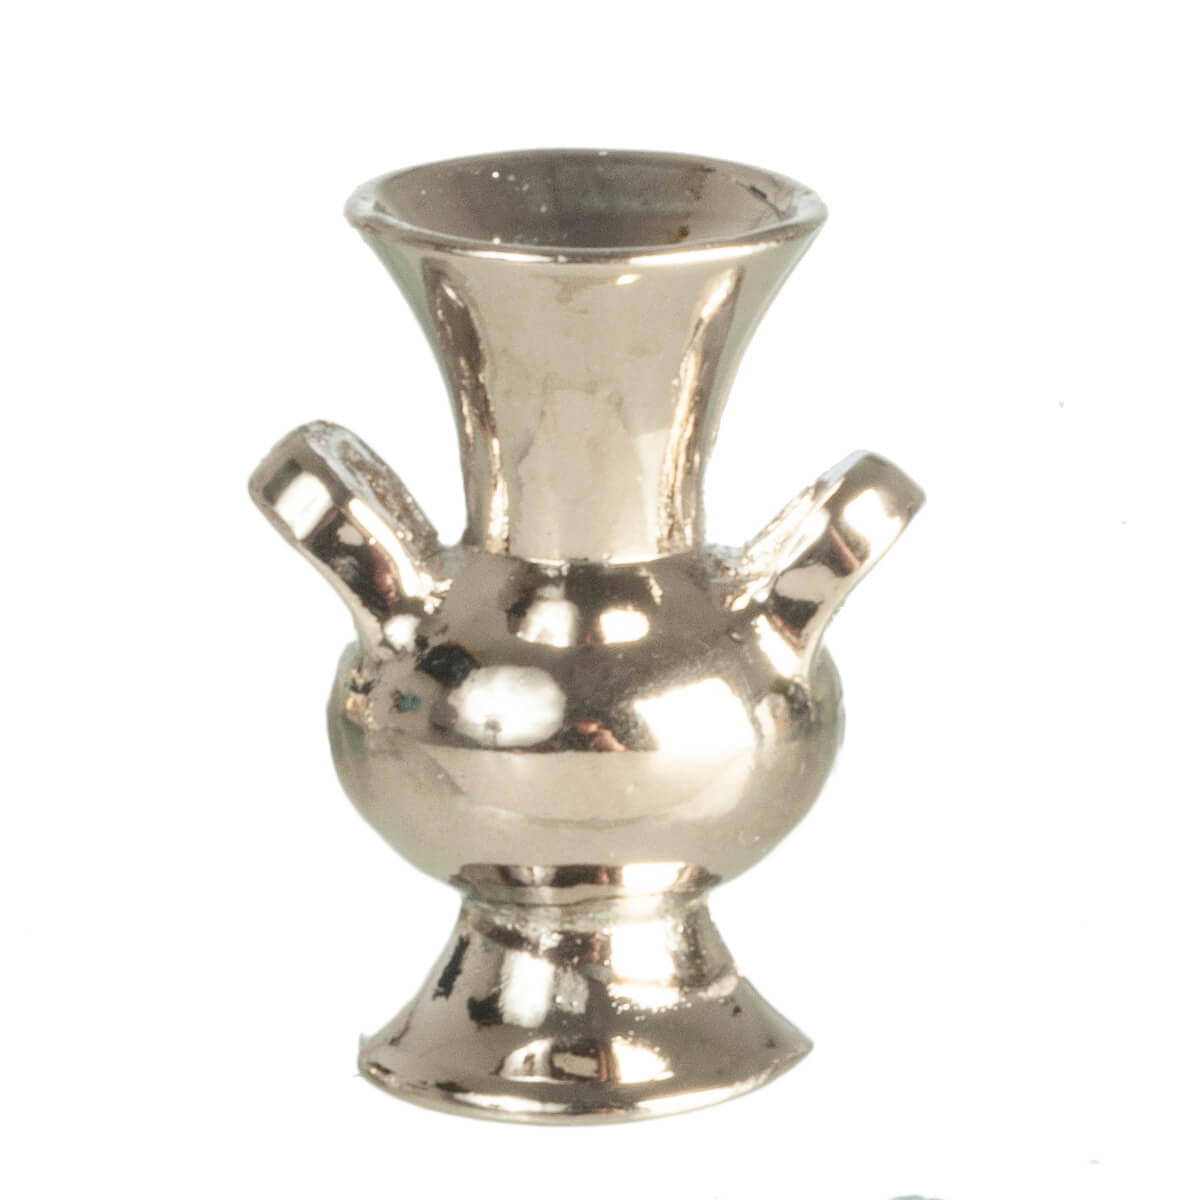 Handled Vase - Silver 2pc